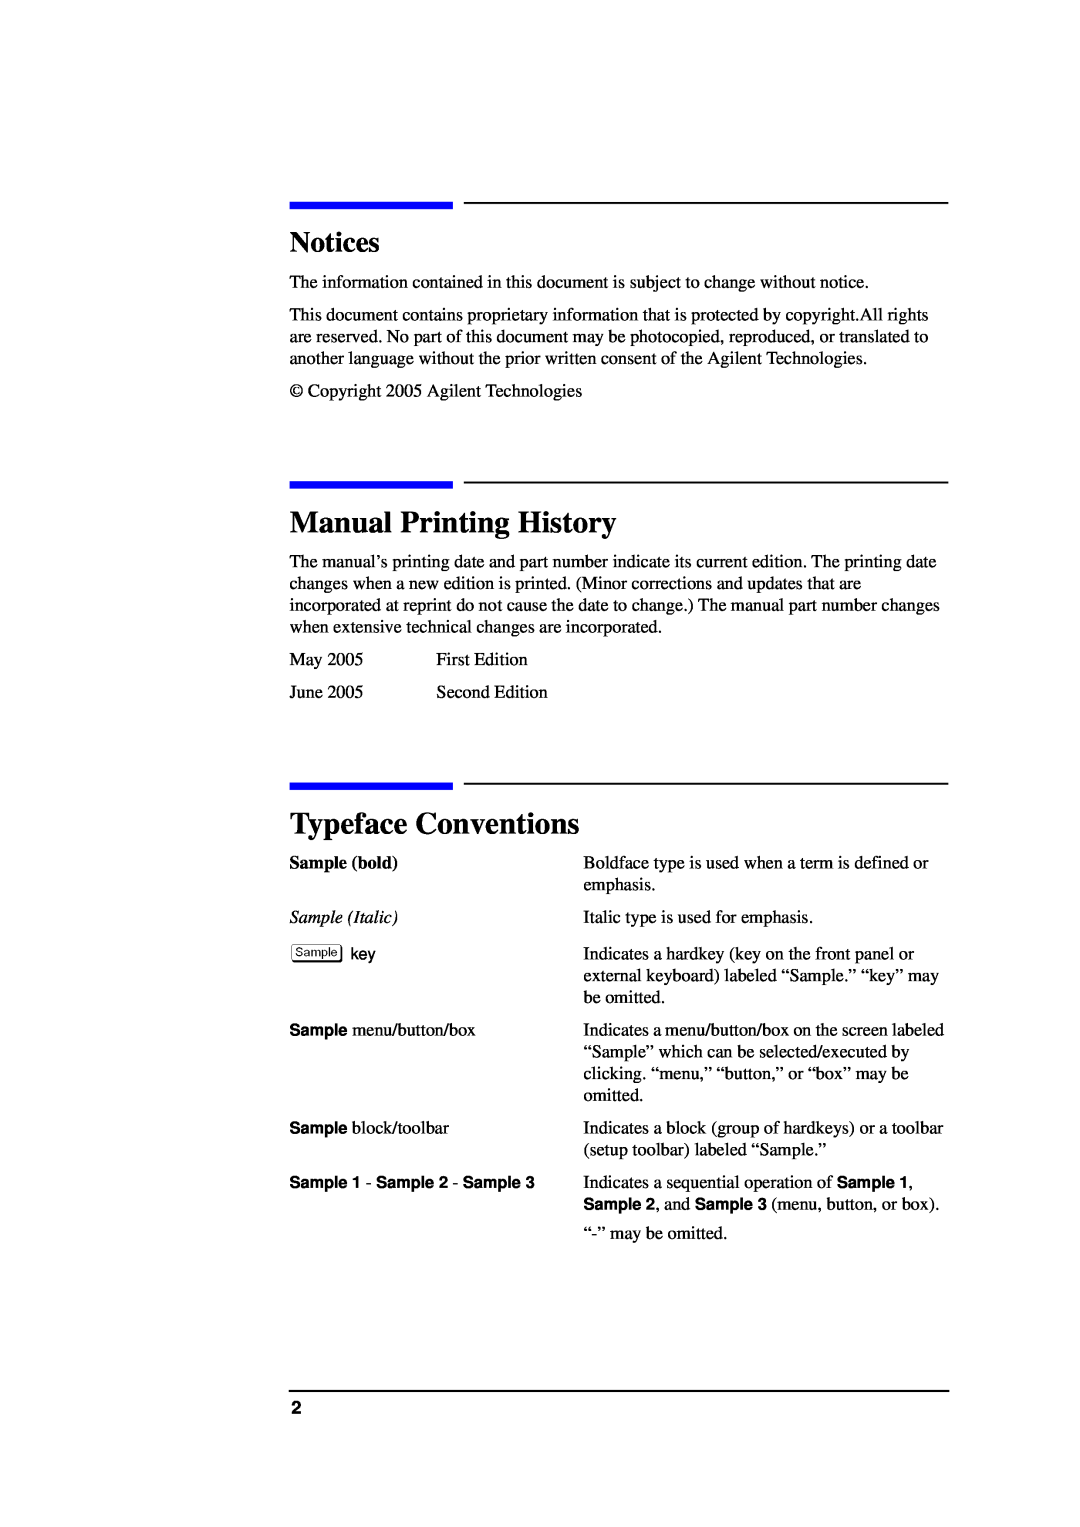 Agilent Technologies E5070BU, E5071BU Sample bold, Manual Printing History, Typeface Conventions, Notices, Sample Italic 